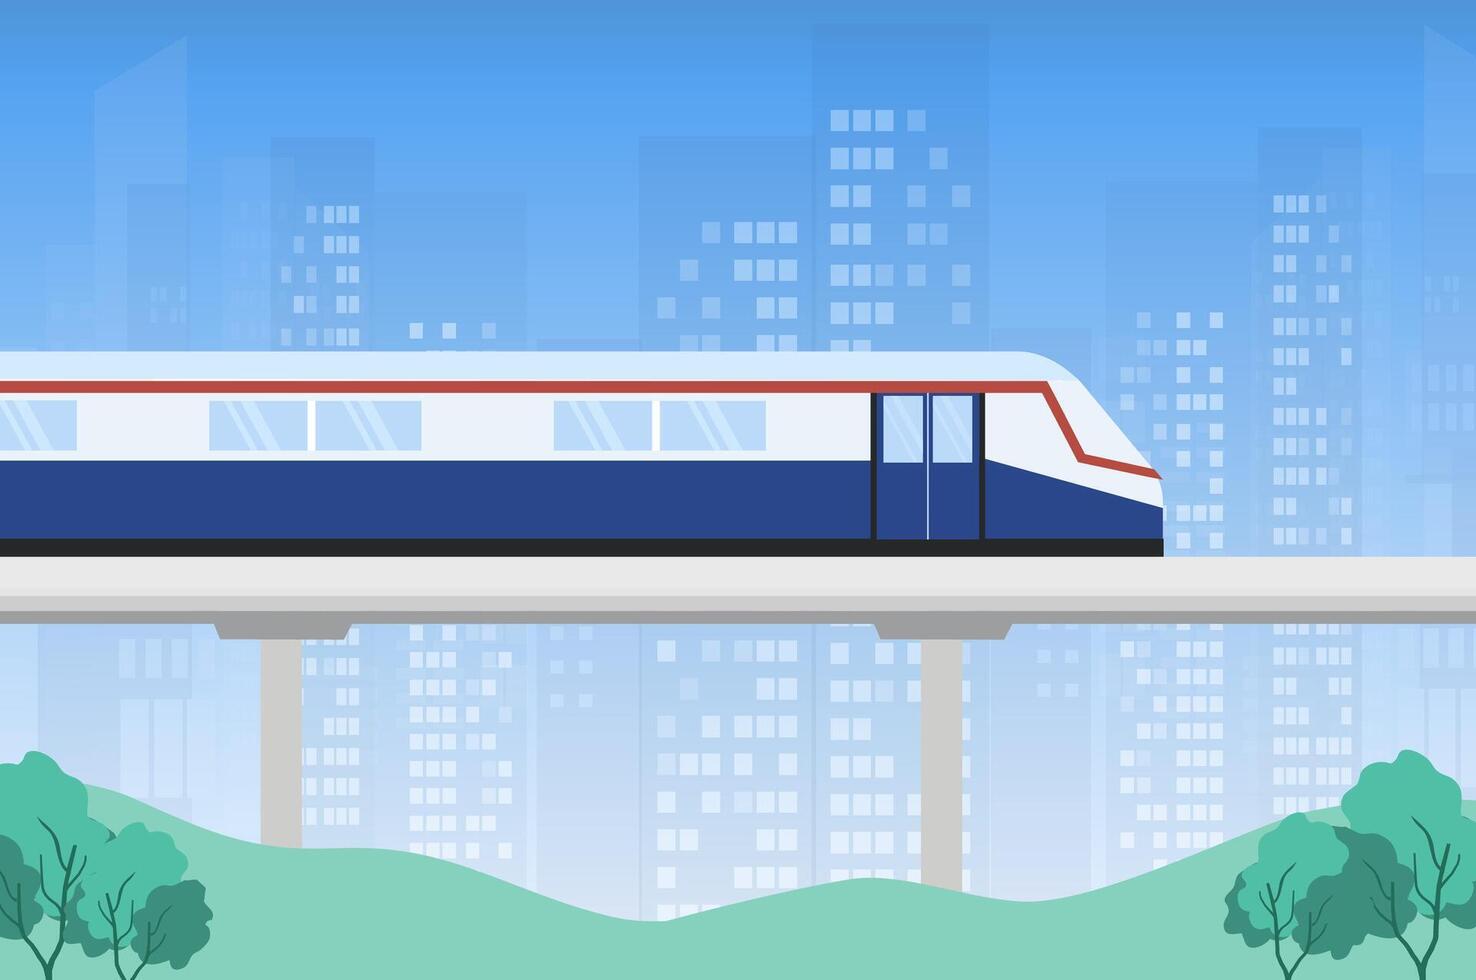 bts lucht trein vector illustratie. vervoer concept